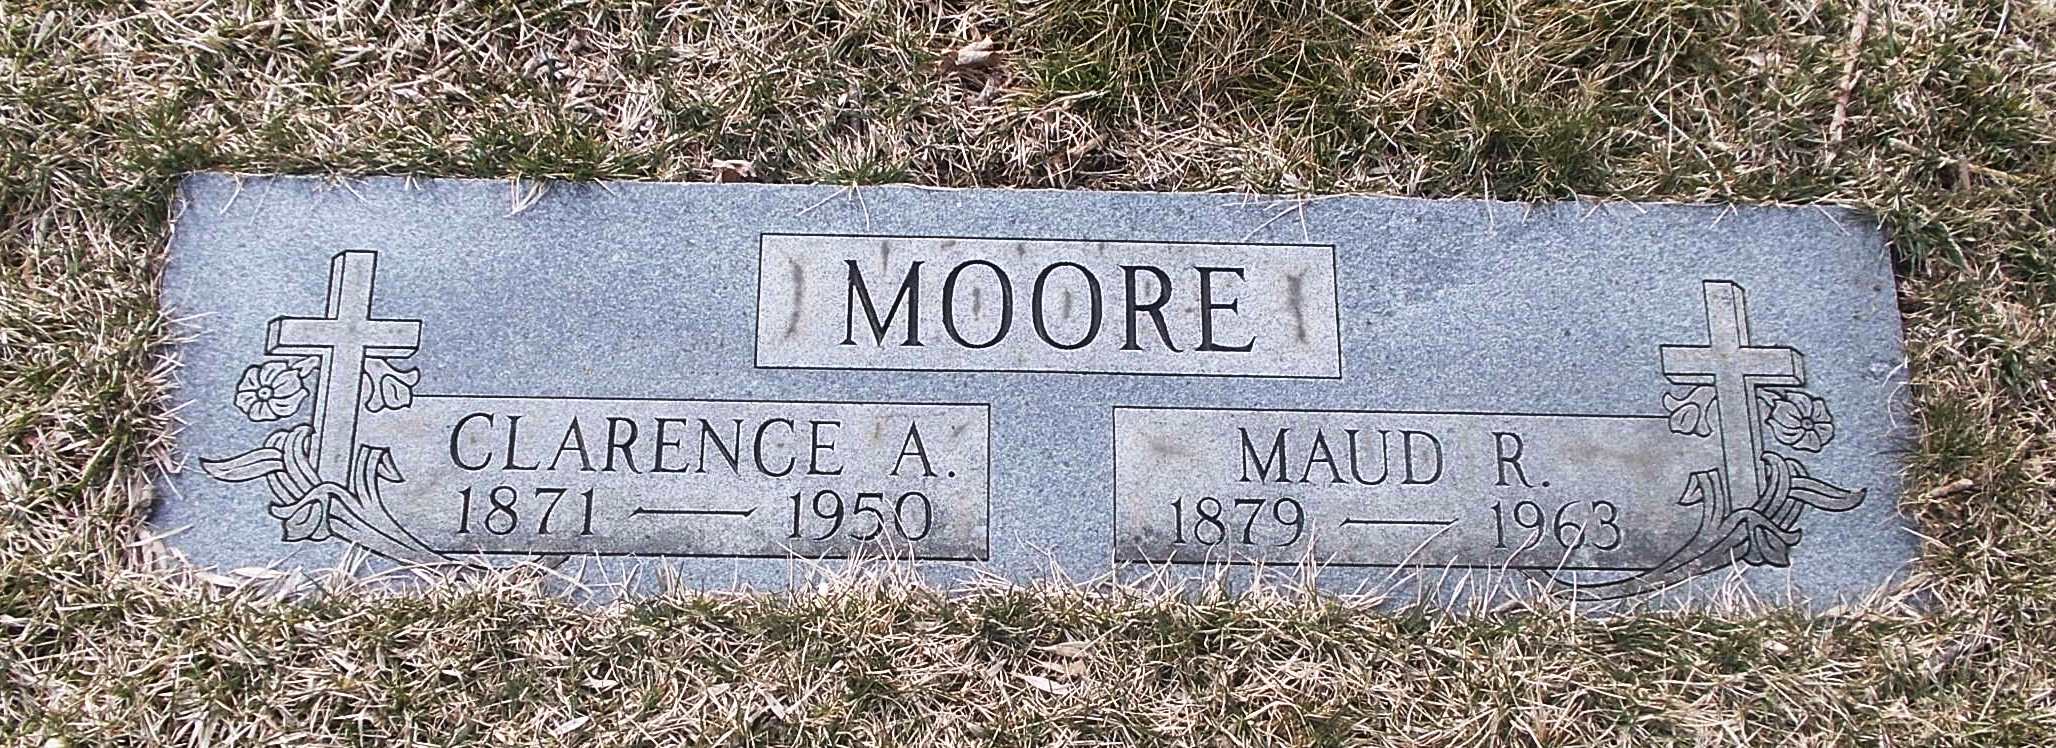 Maud R Moore